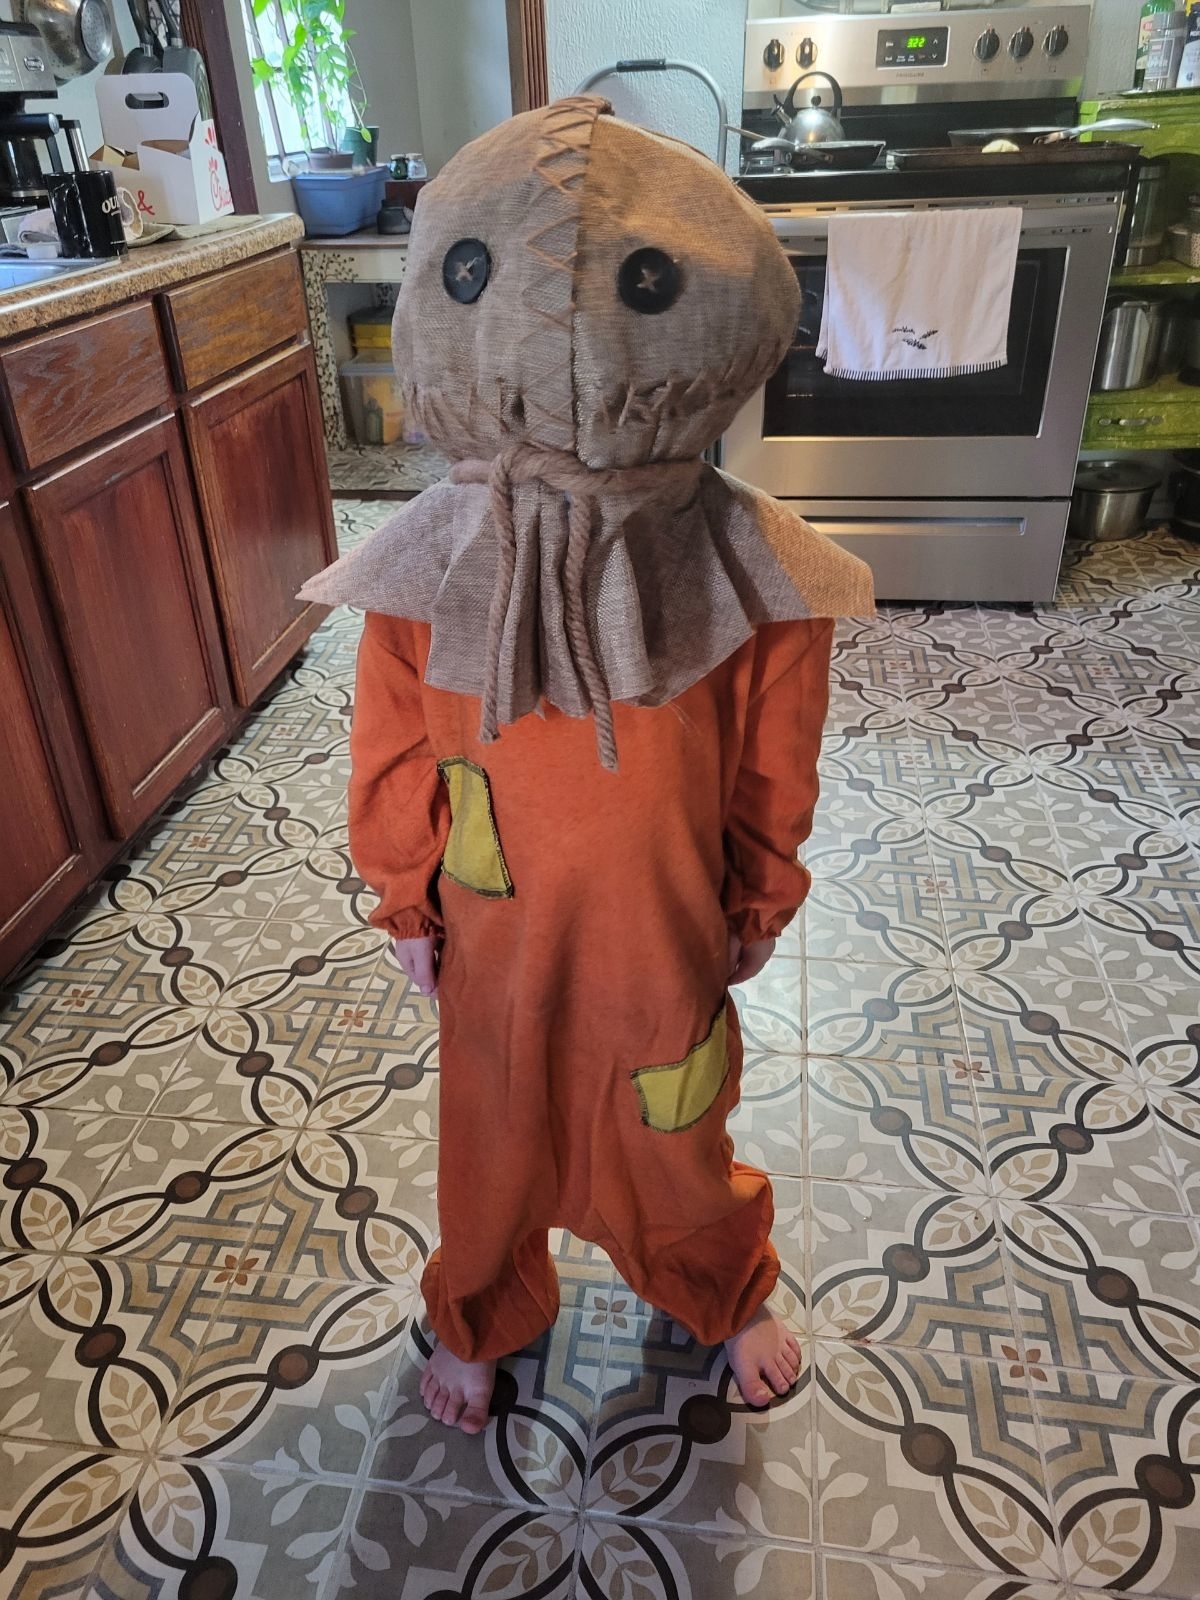 A little boy in a Halloween costume